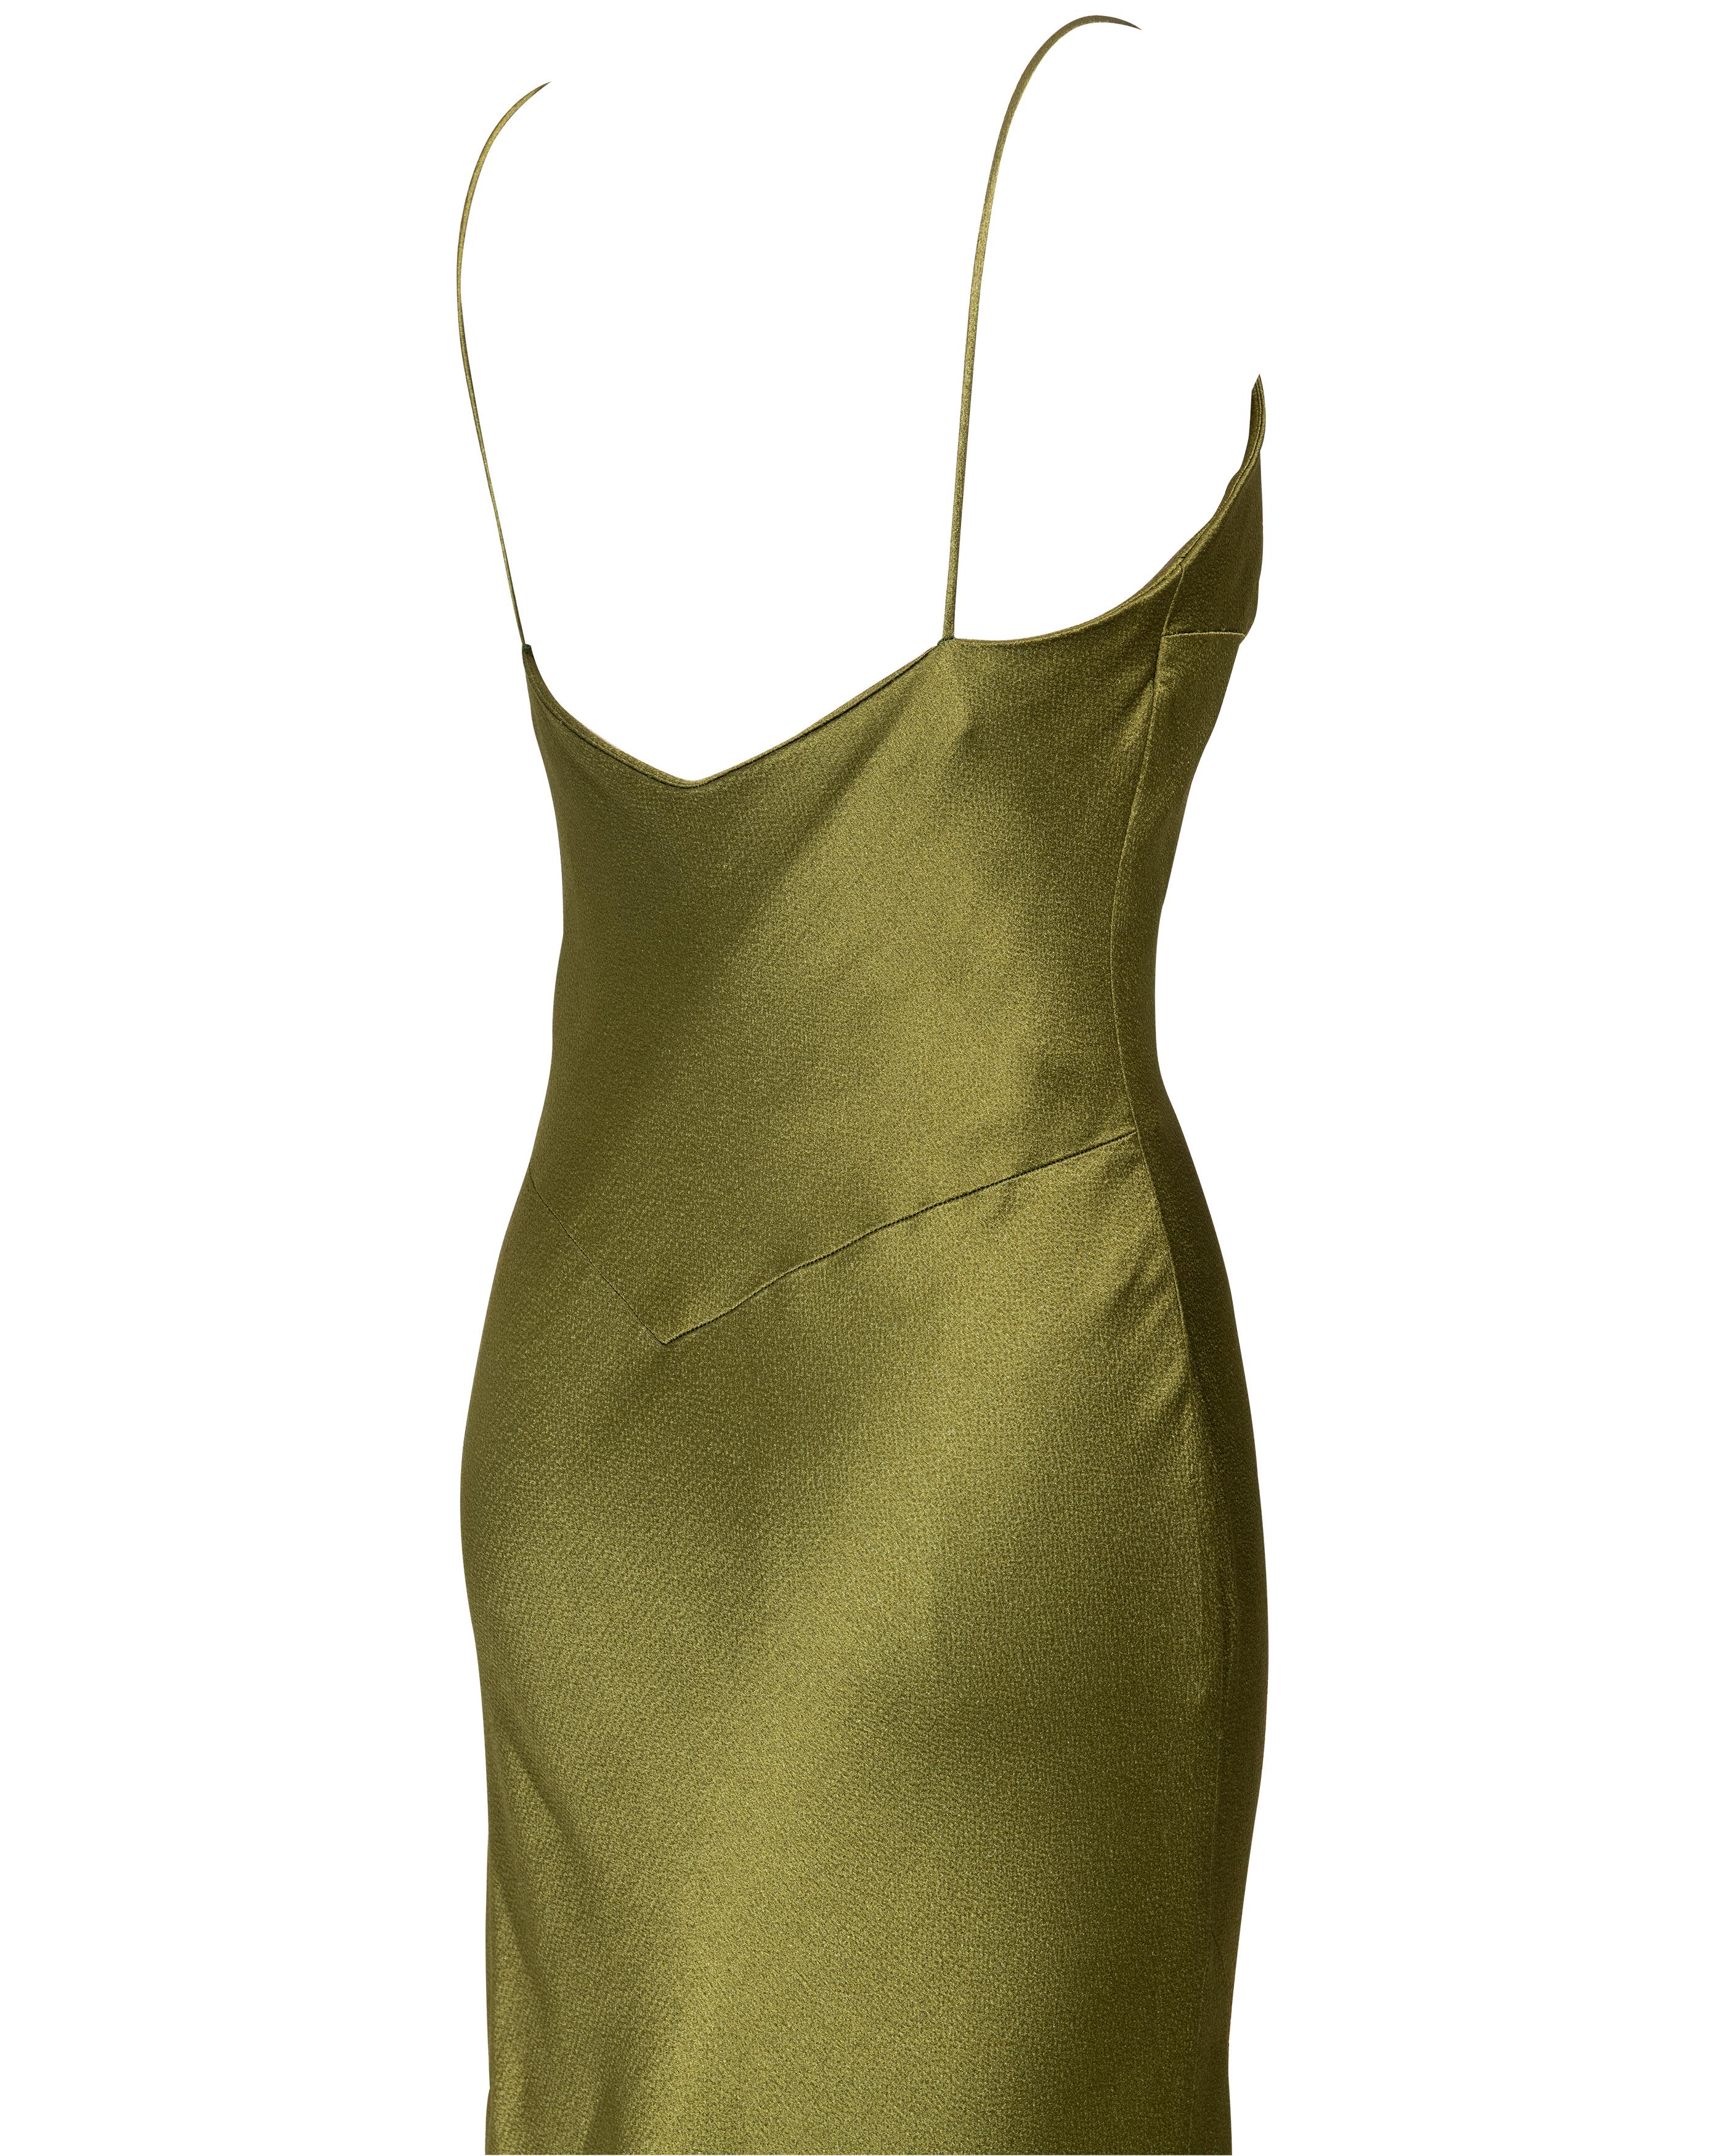 Robe-culotte Christian Dior by John Galliano vert olive coupée en biais, P/E 1999 5